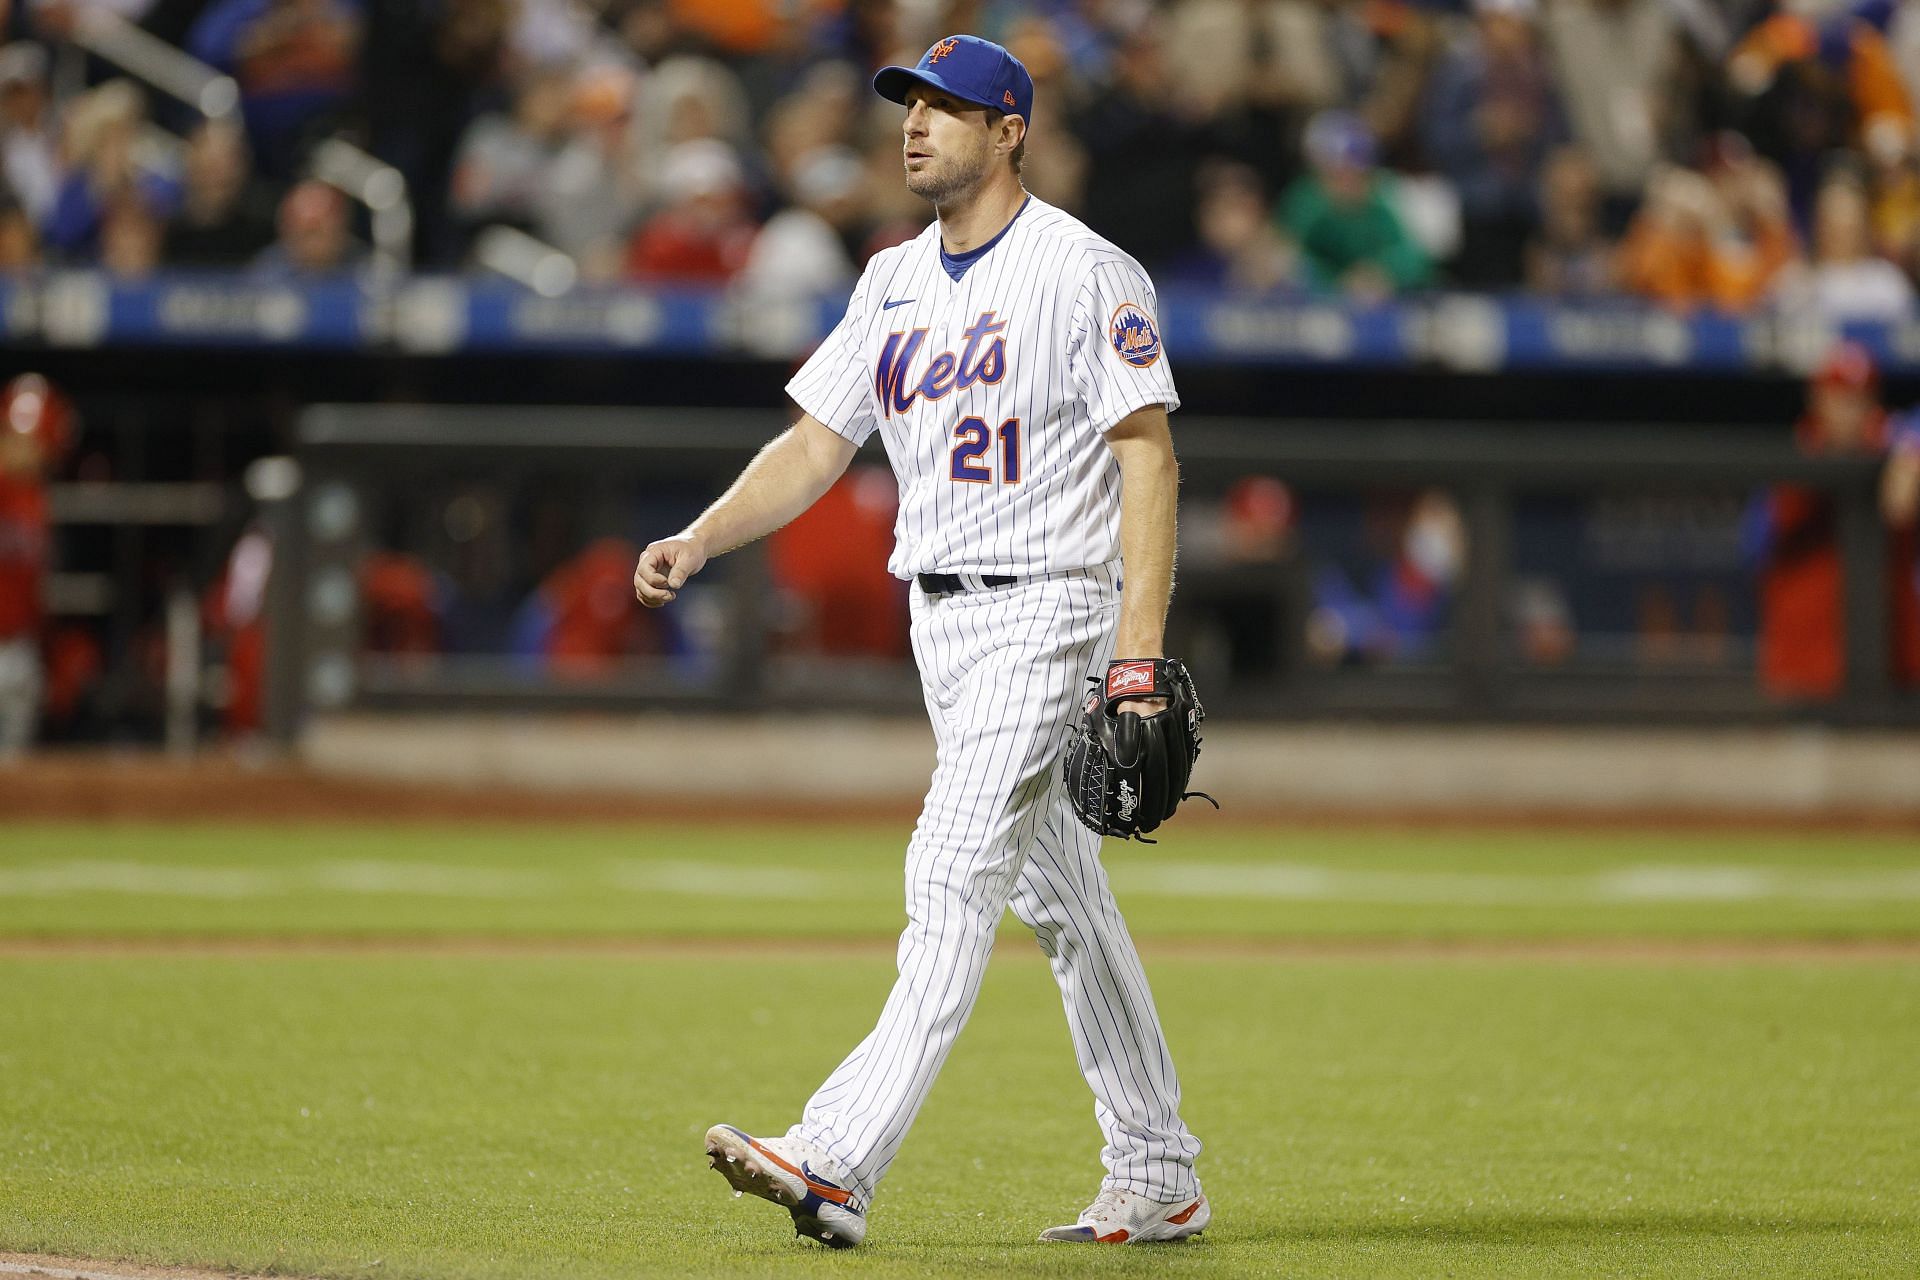 Watch: I'm done Max Scherzer signals to the New York Mets dugout